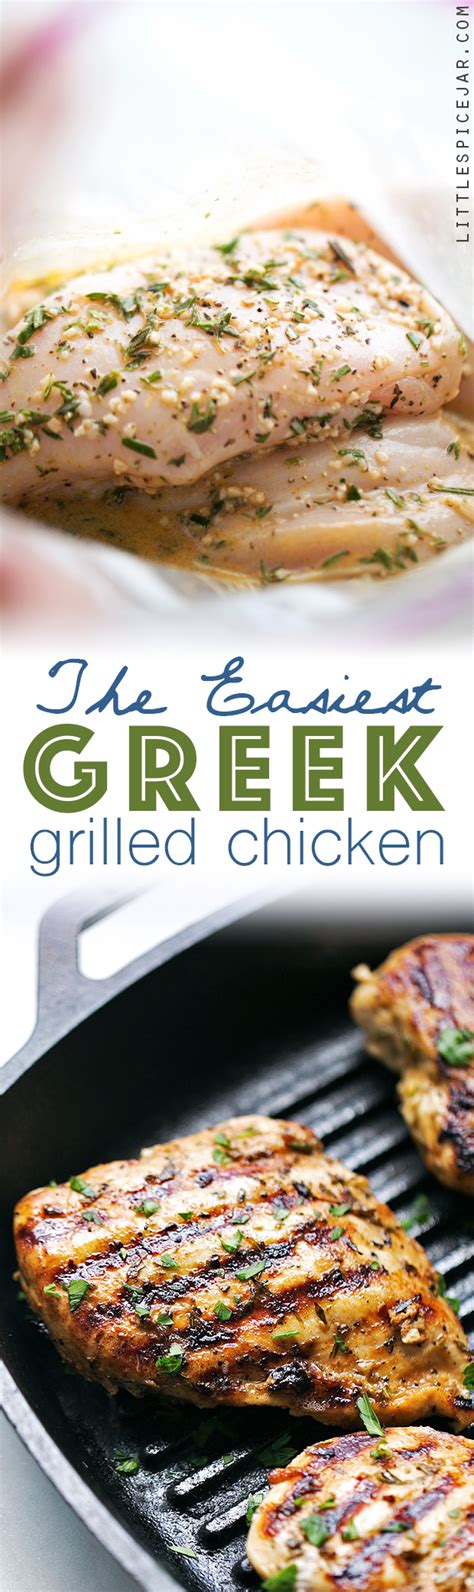 The Easiest Greek Grilled Chicken Recipe Little Spice Jar